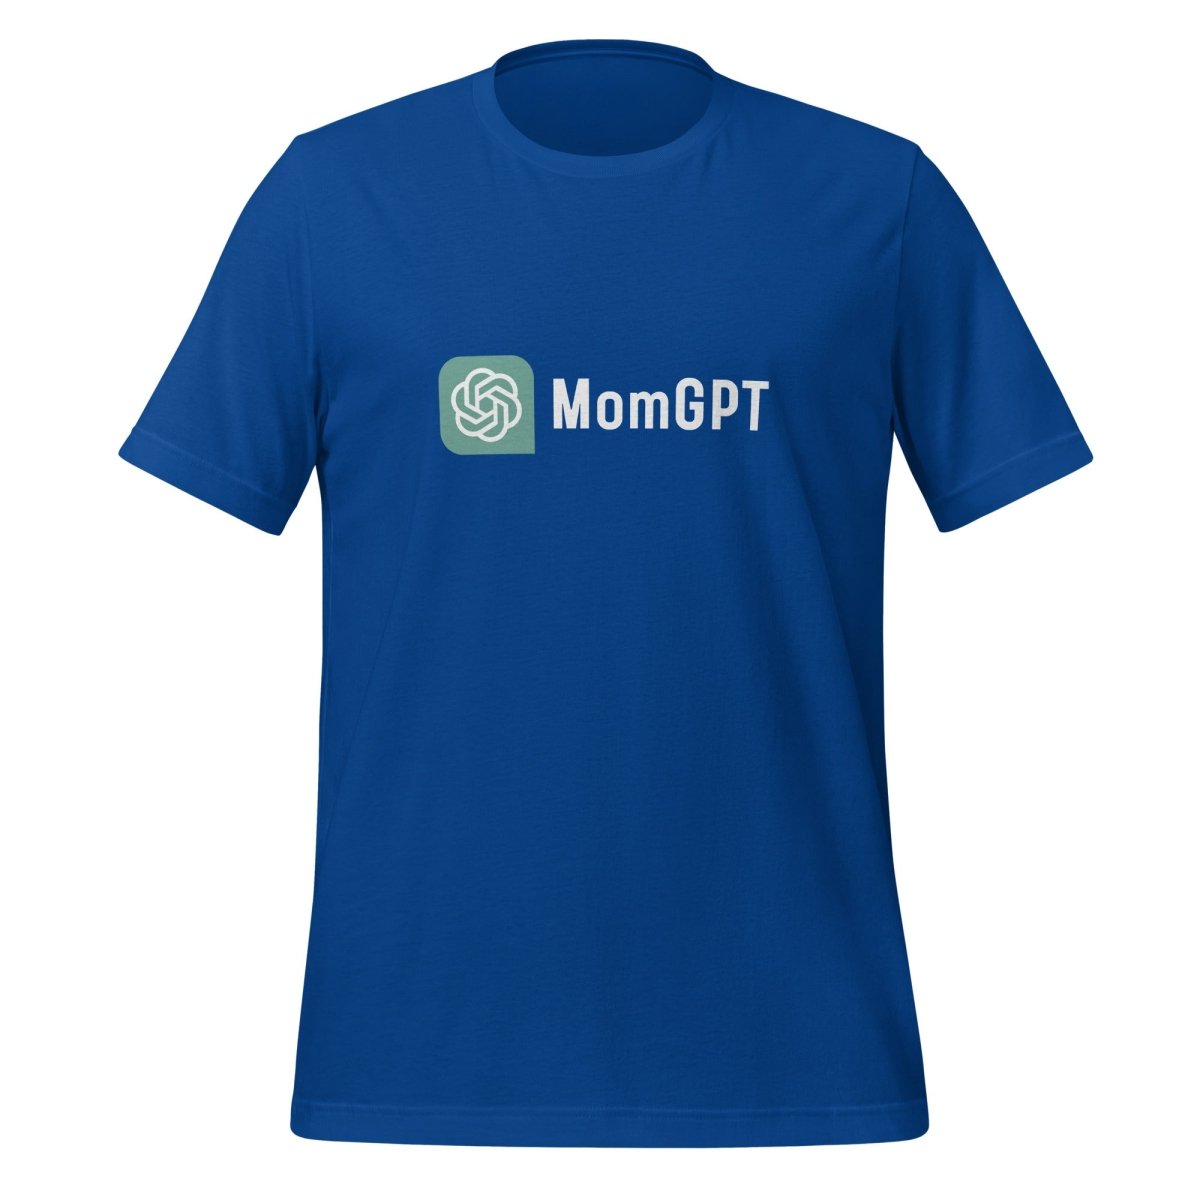 MomGPT T - Shirt (unisex) - True Royal - AI Store